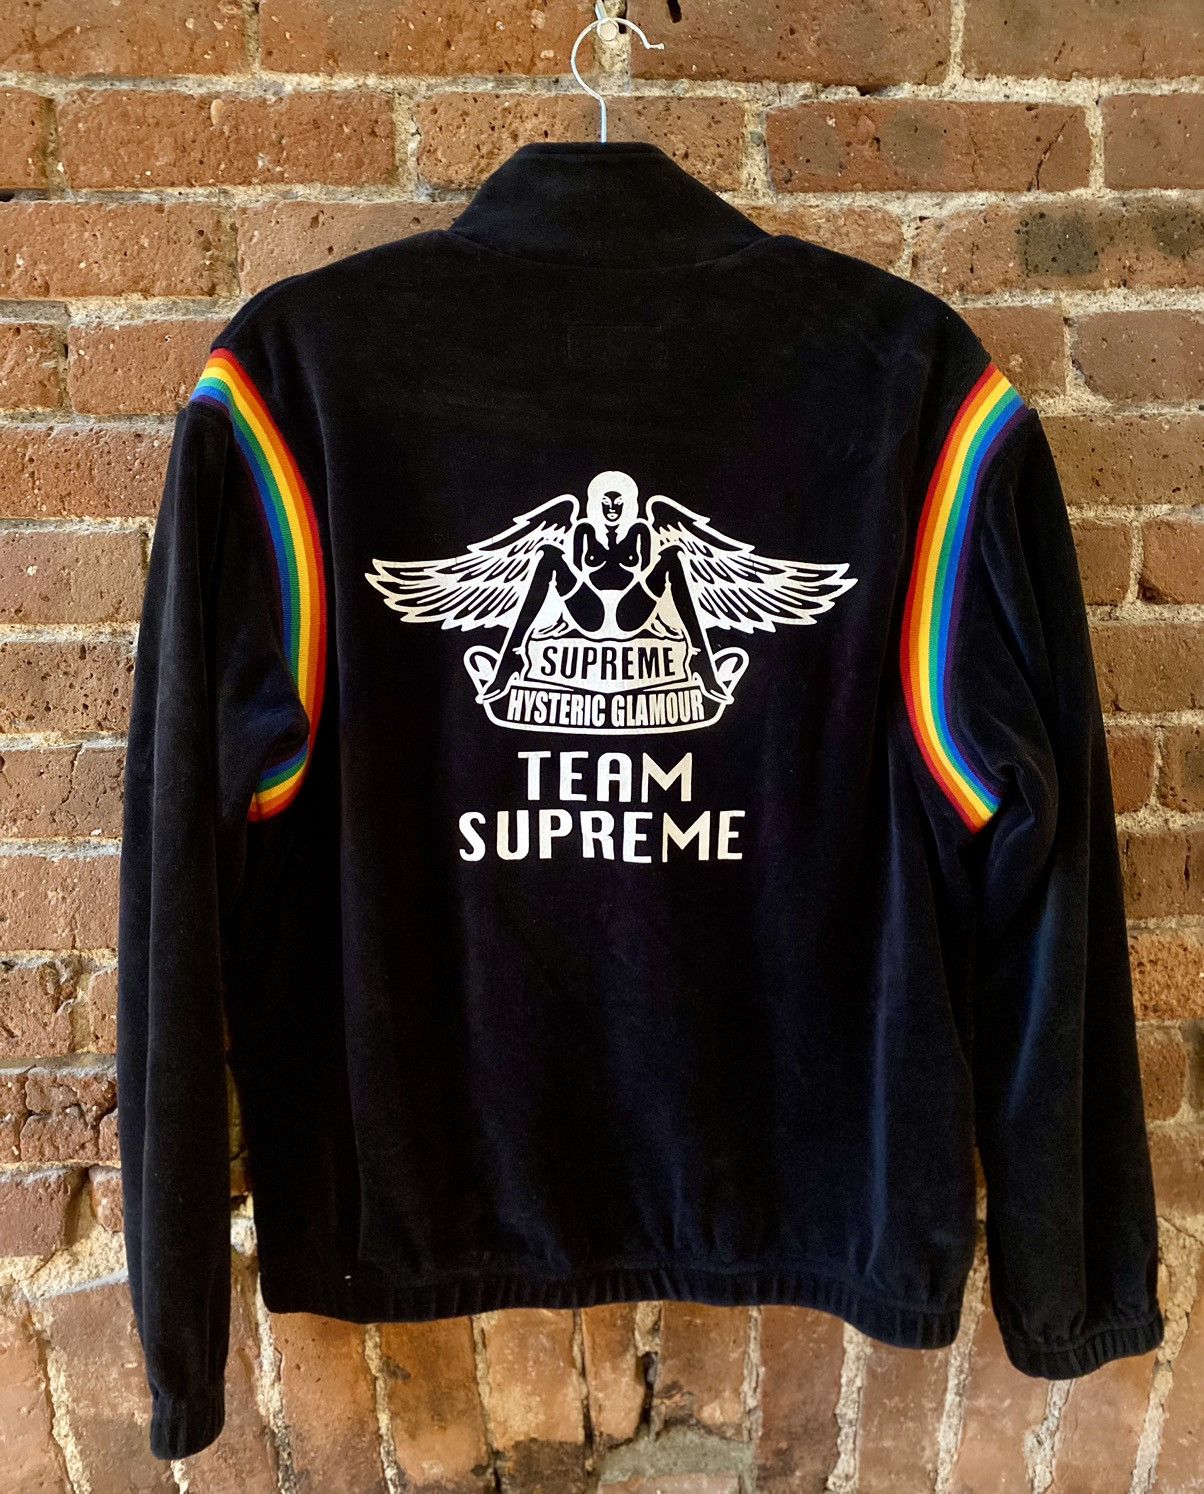 Supreme Supreme Hysteric Glamour Velour Track Jacket | Grailed